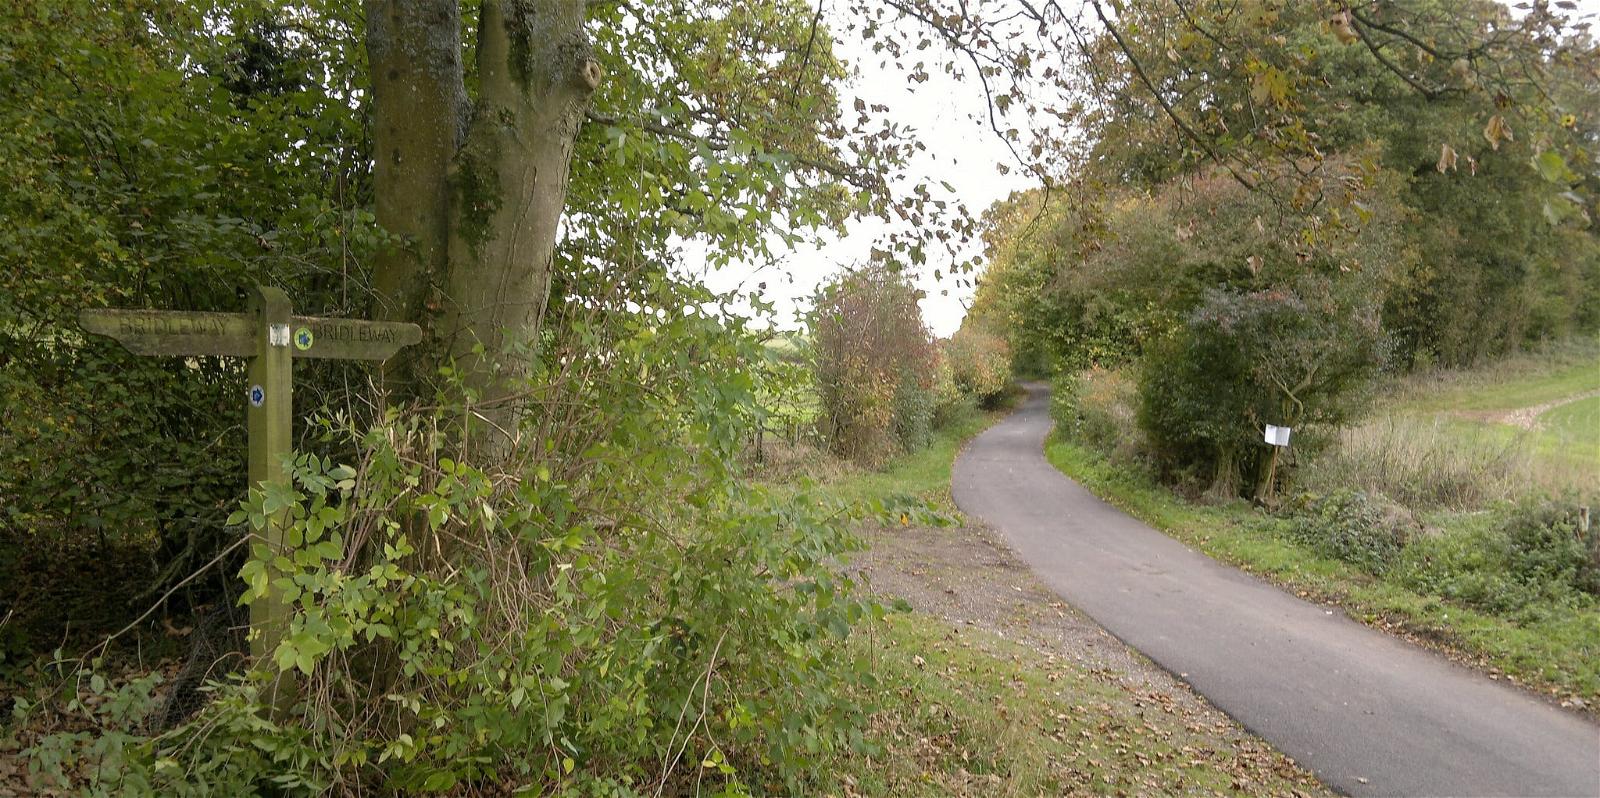 Portway 의 이미지. uk england sign hampshire bridleway hants publicbridleway cyclingdiscoveries mapmyride:route=1043529039